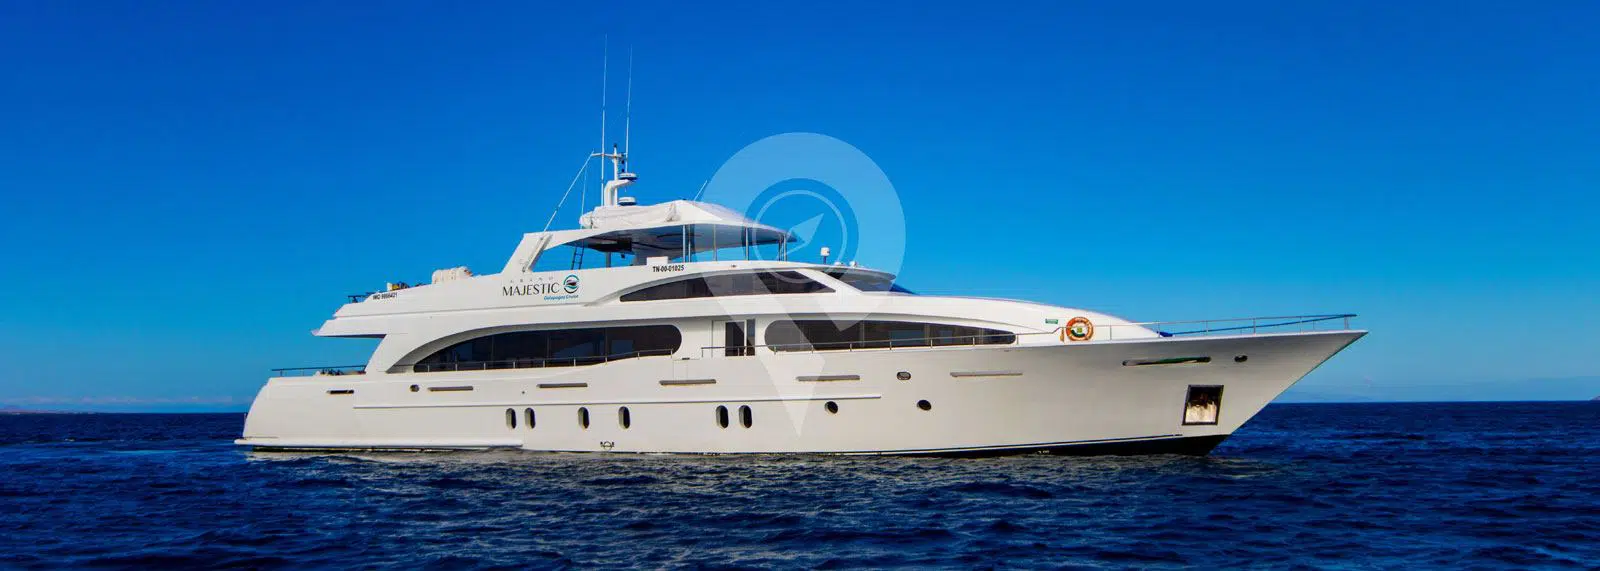 Grand Majestic Galapagos Yacht